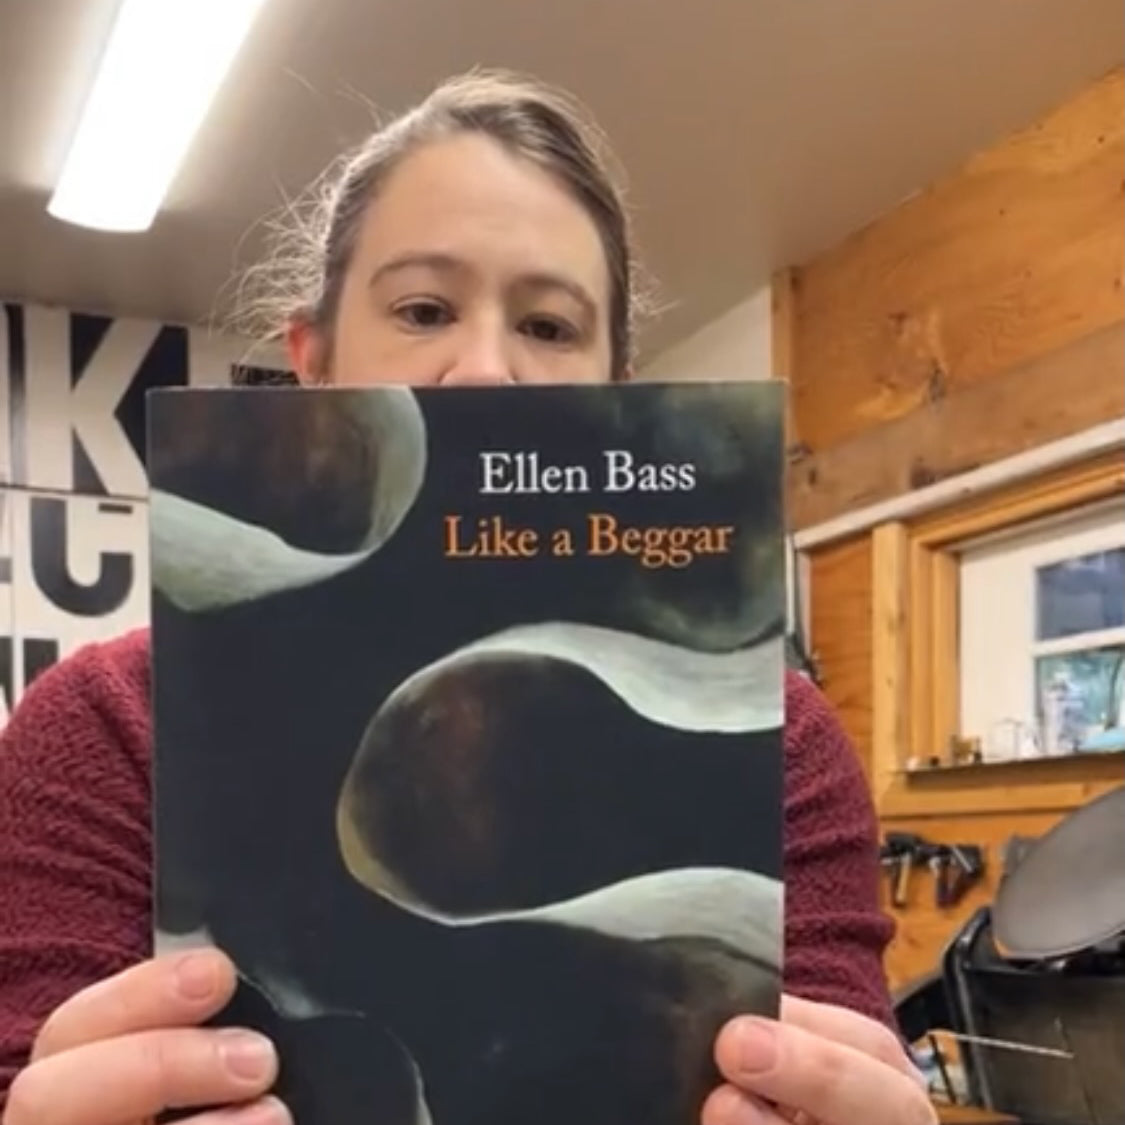 Reading “Saturn’s Rings” by Ellen Bass